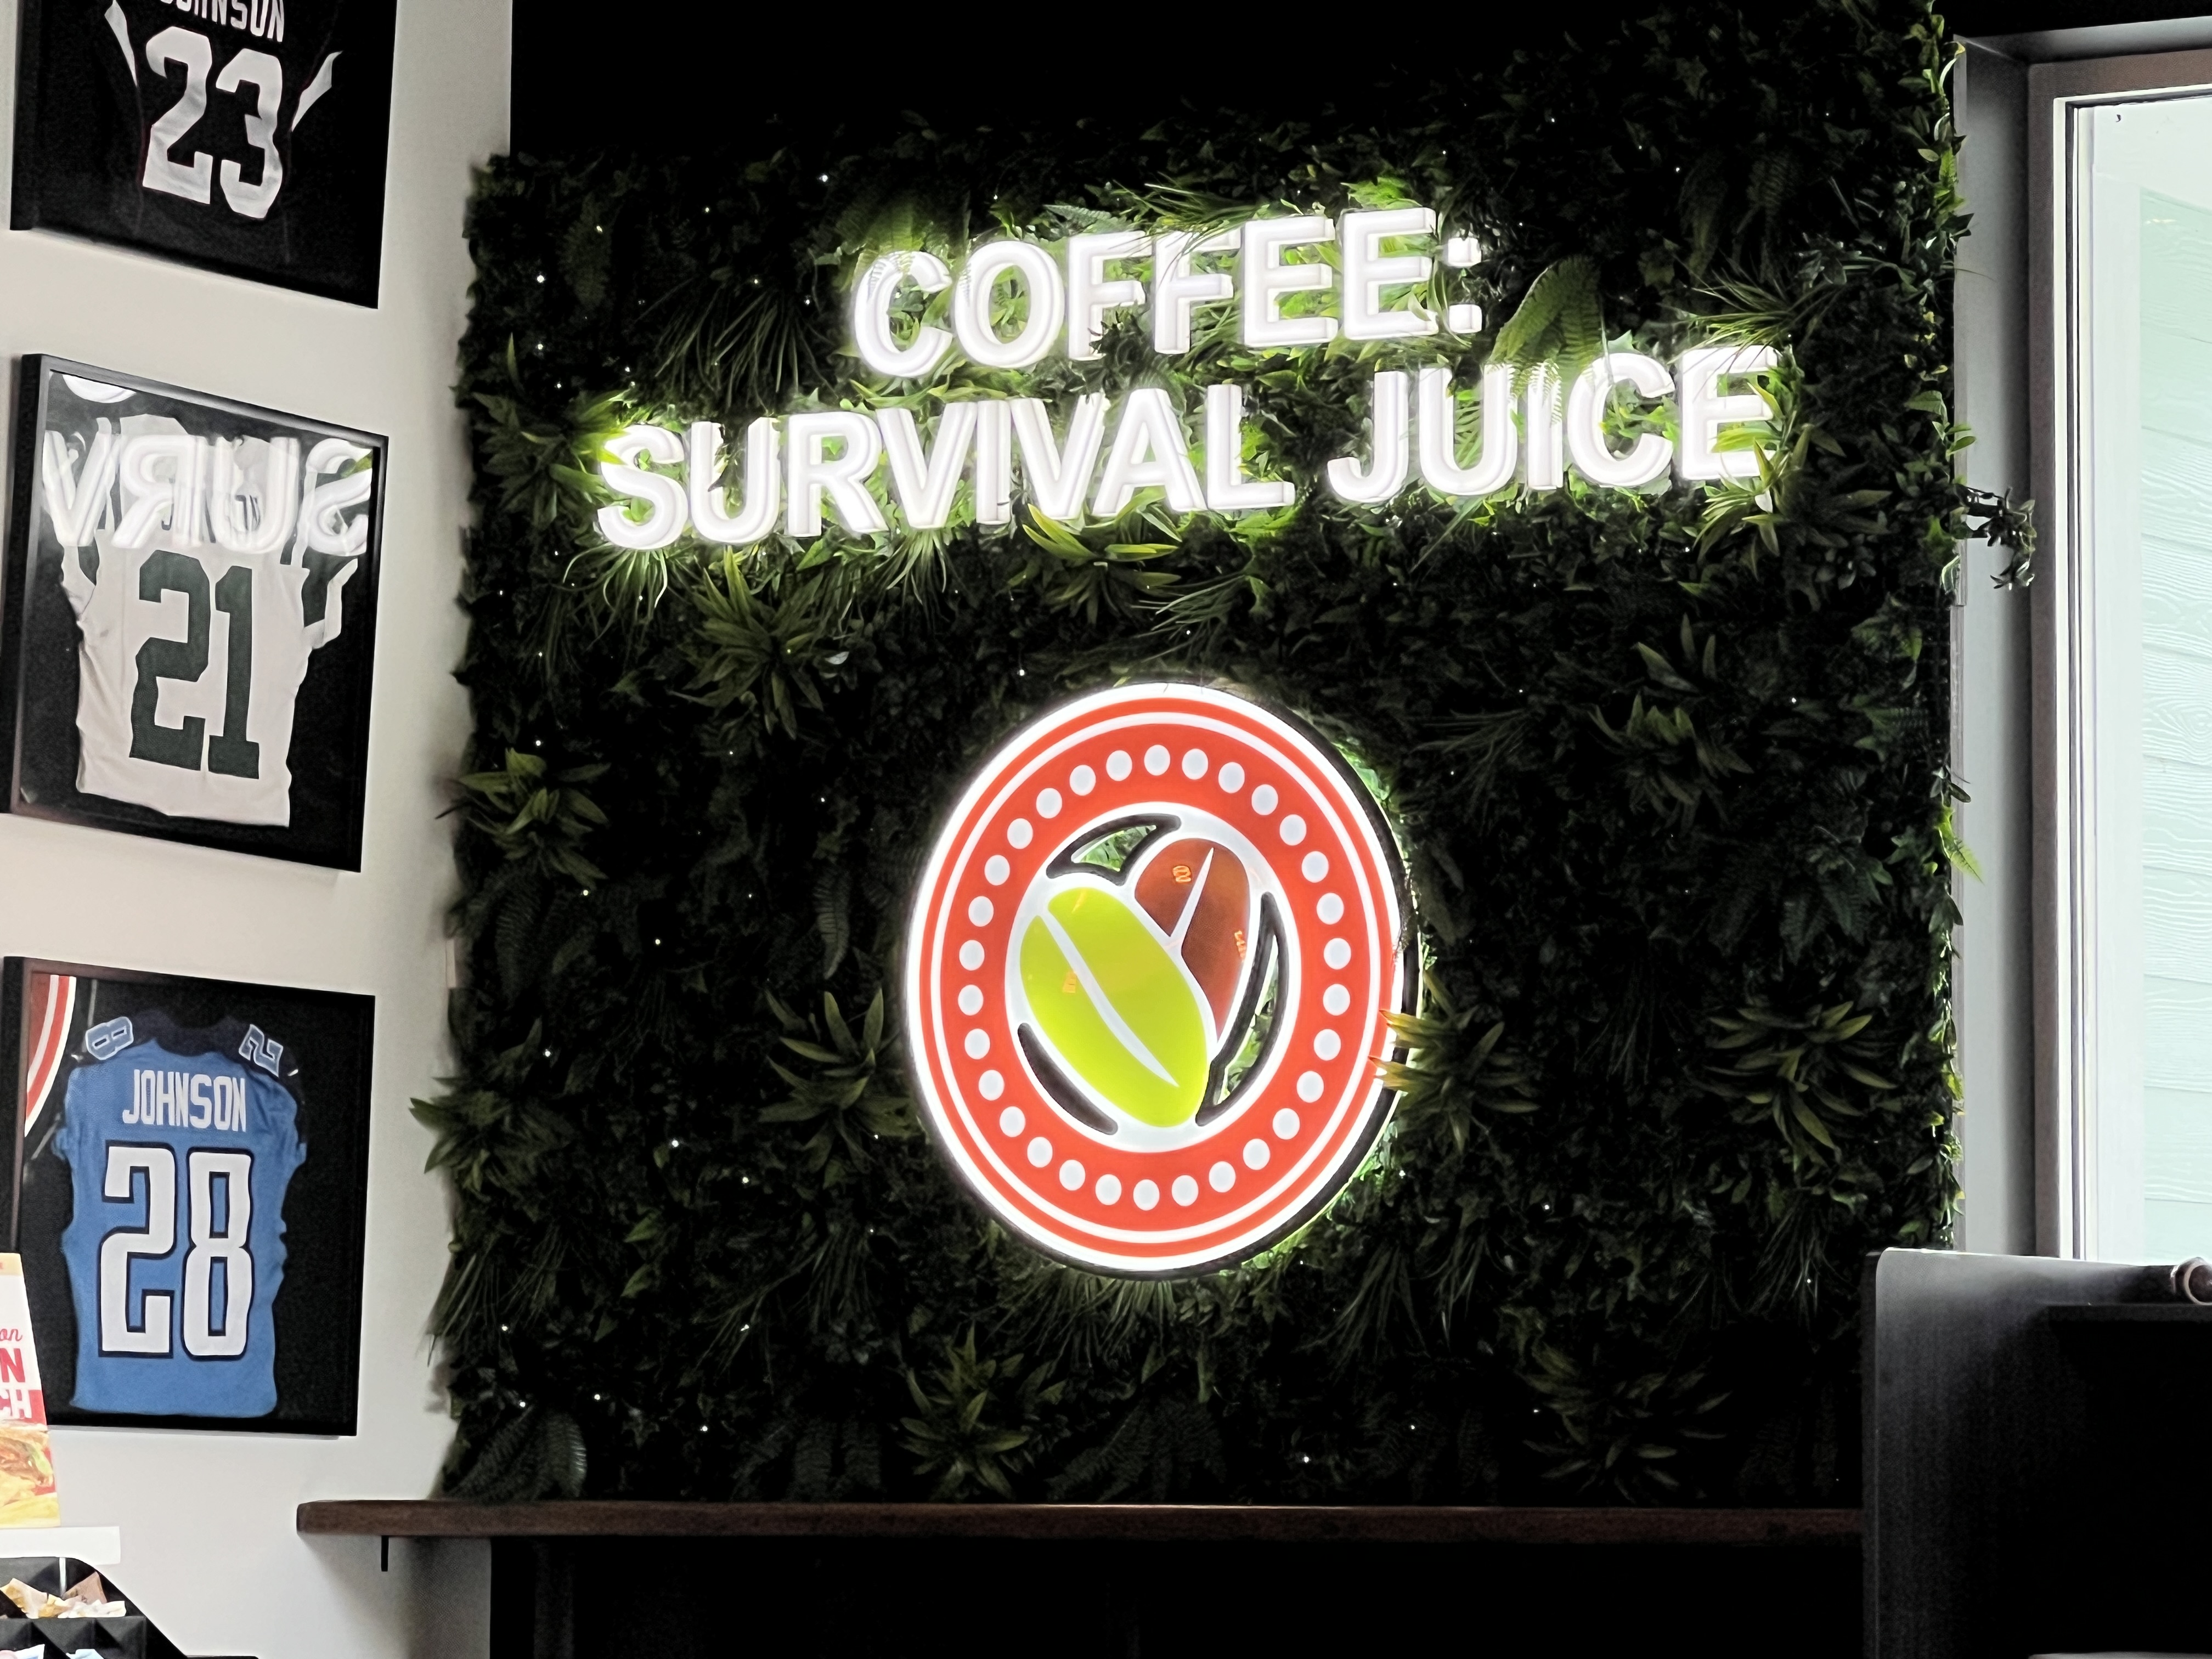 Just Love Coffee Cafe - Coffee Survival Juice